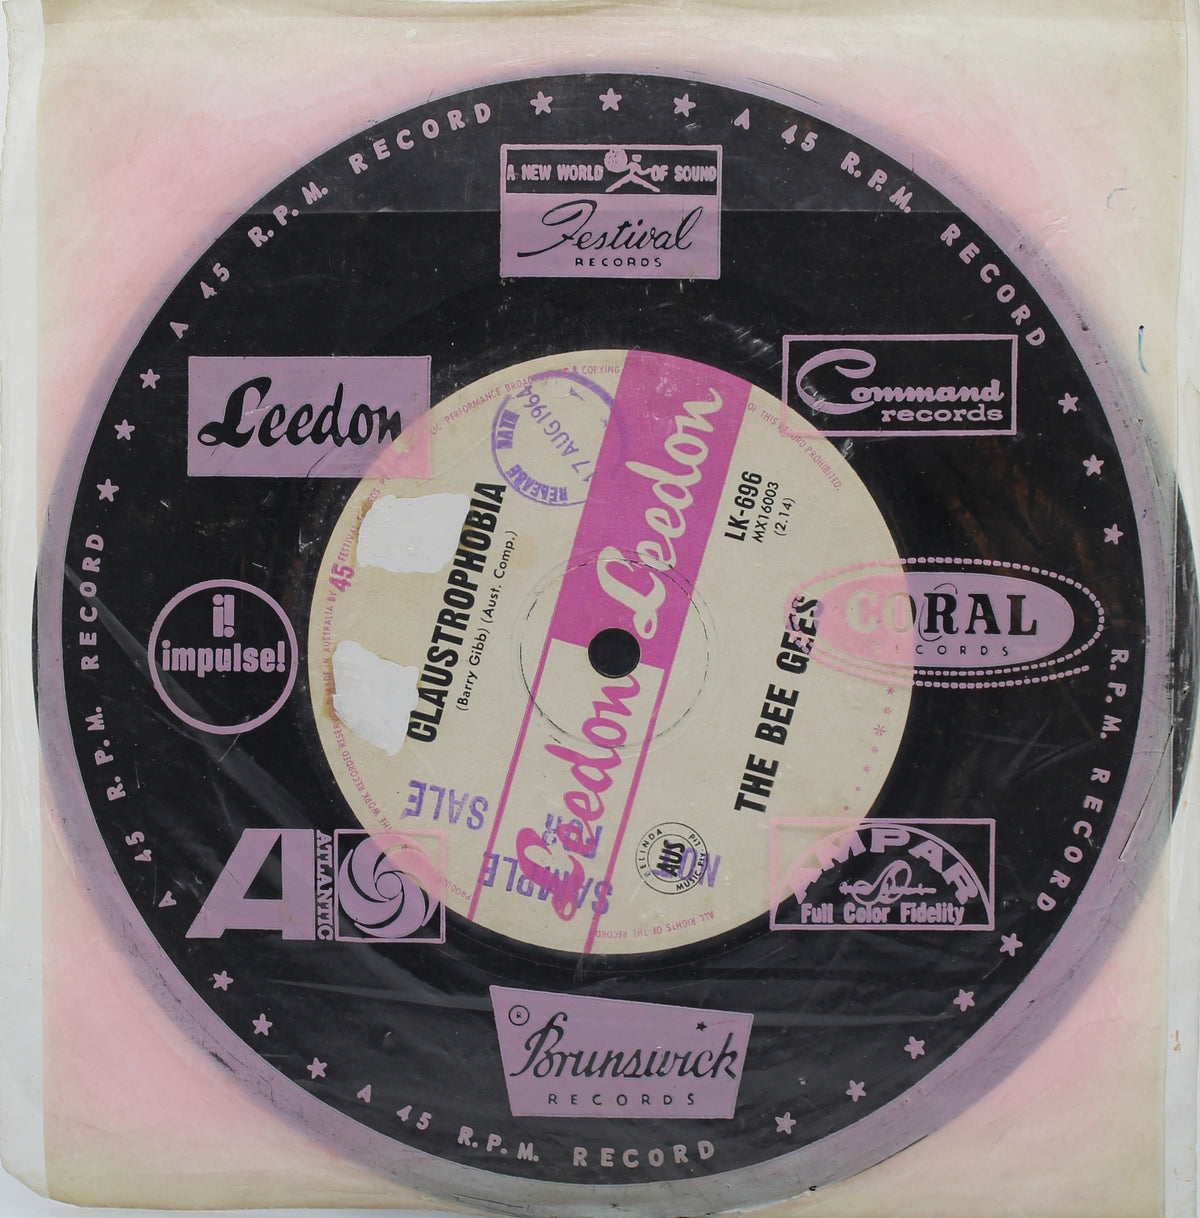 Bee Gees, Leedon, Claustrophobia, Vinyl Single Australia 1964 (1088)